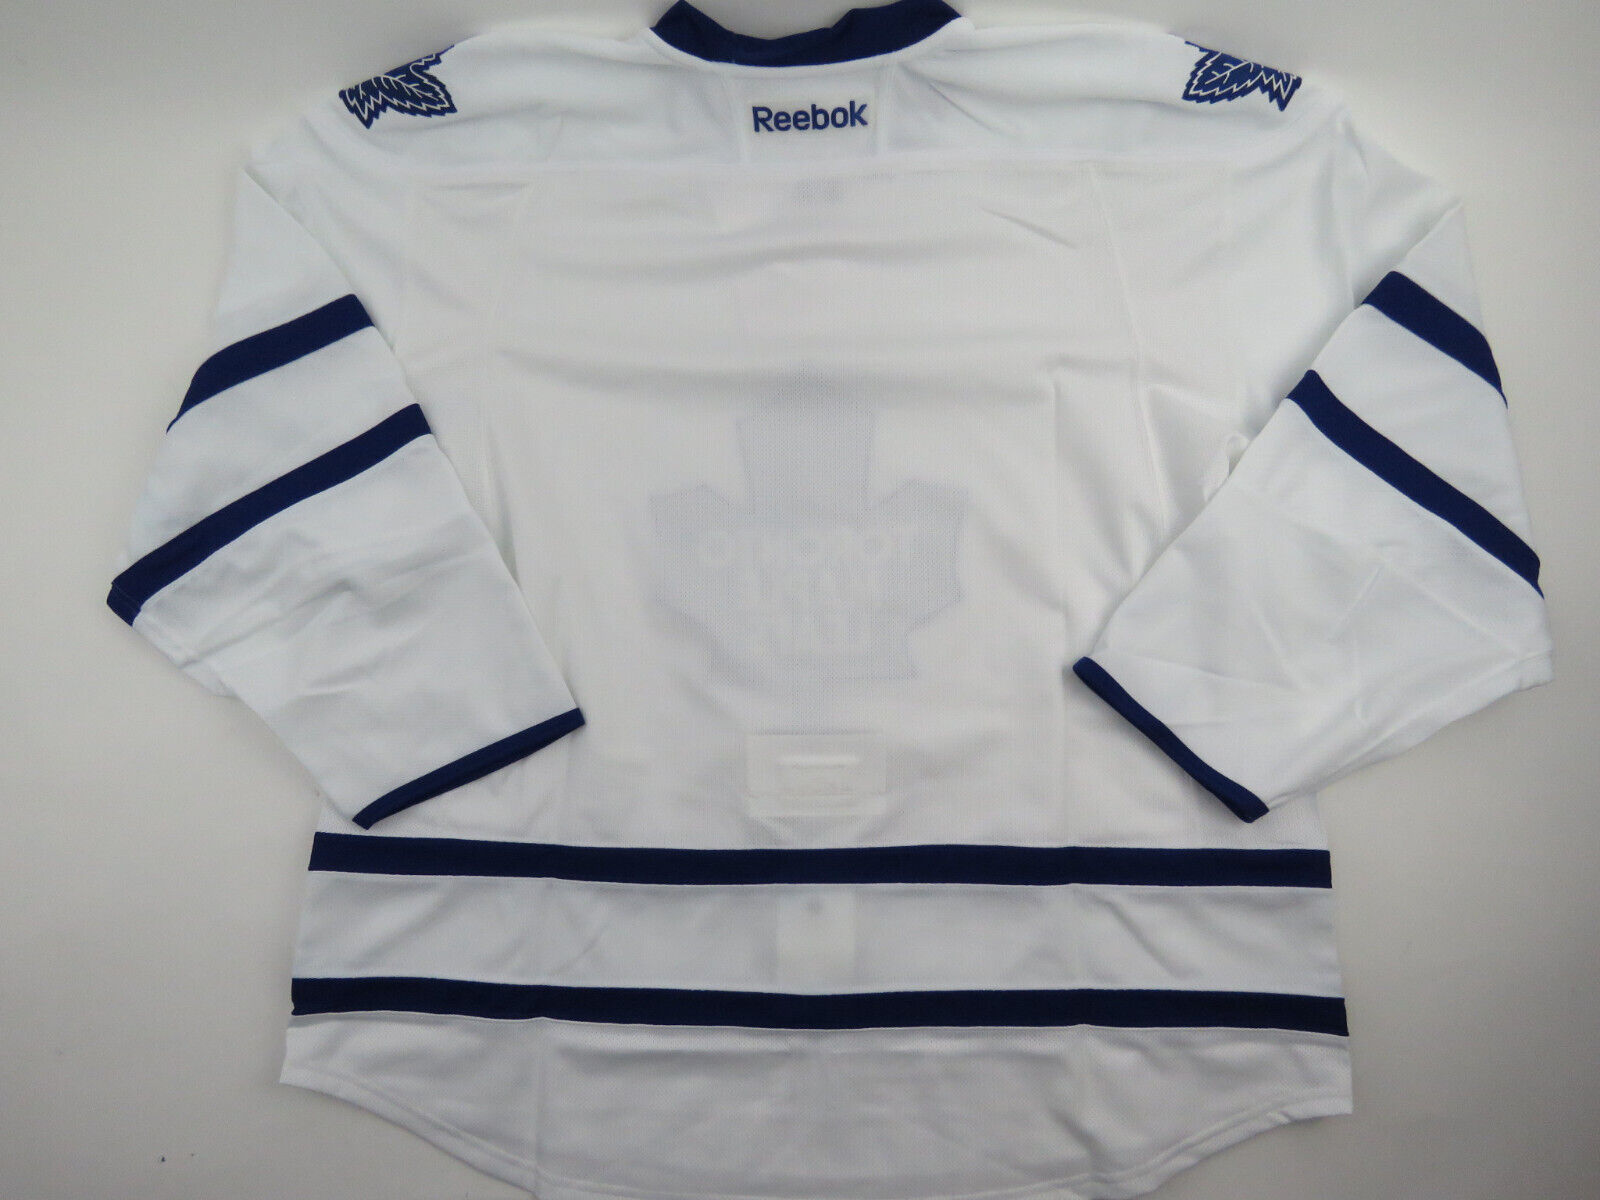 Reebok Toronto Maple Leafs Team Issued NHL Hockey Game Jersey 58+ White Away MiC